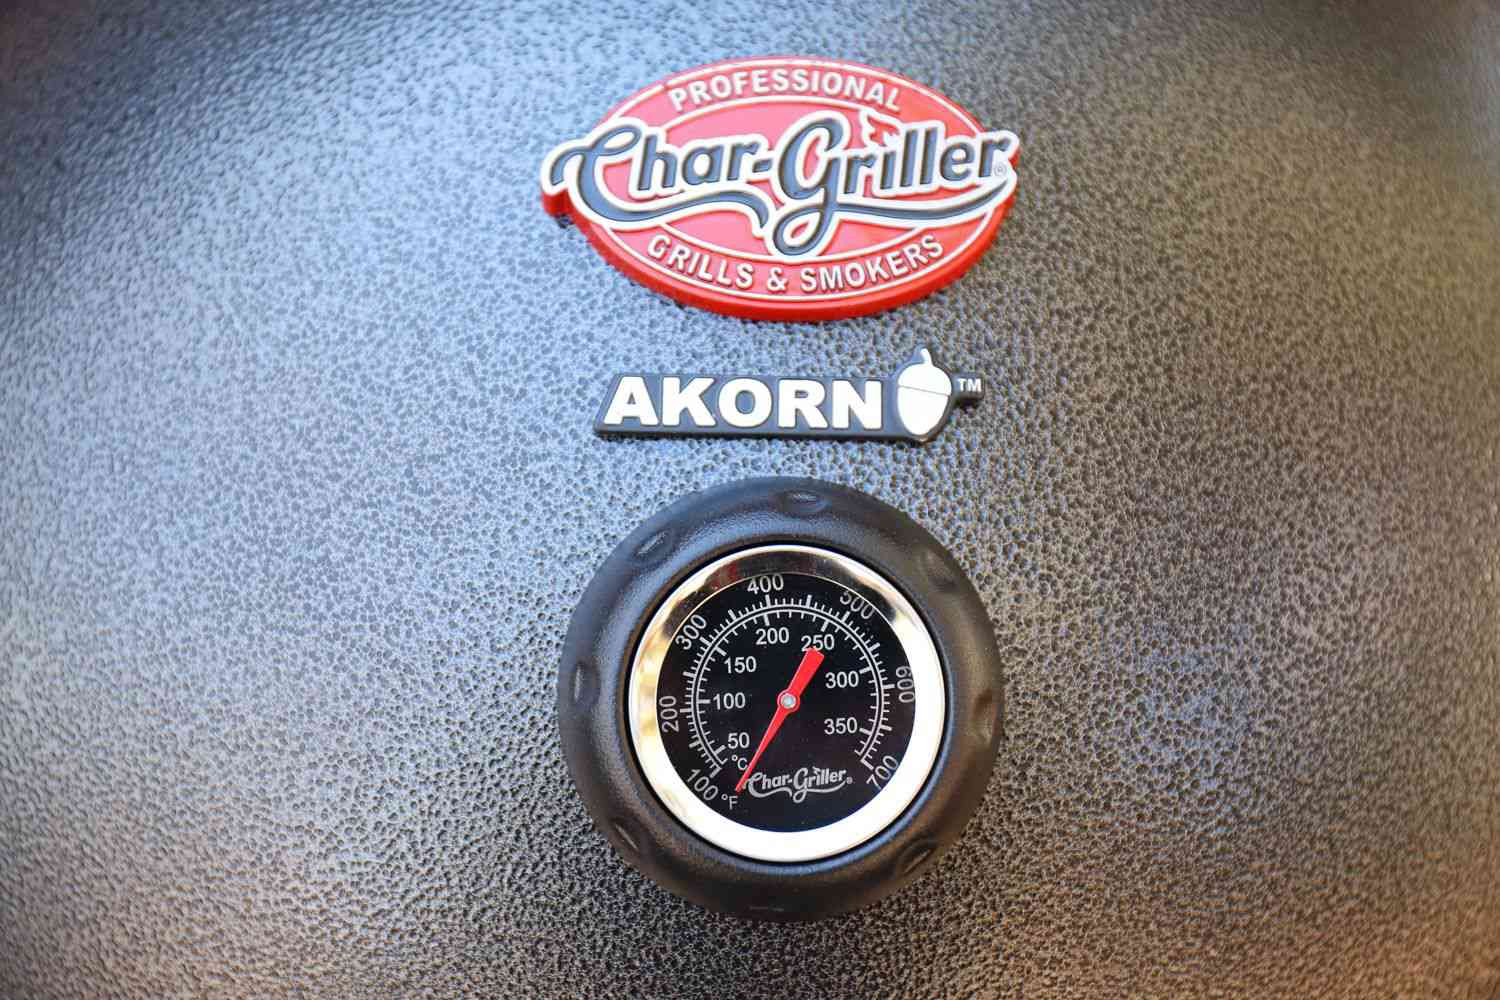 Char-Griller AKORN Kamado Charcoal Grill